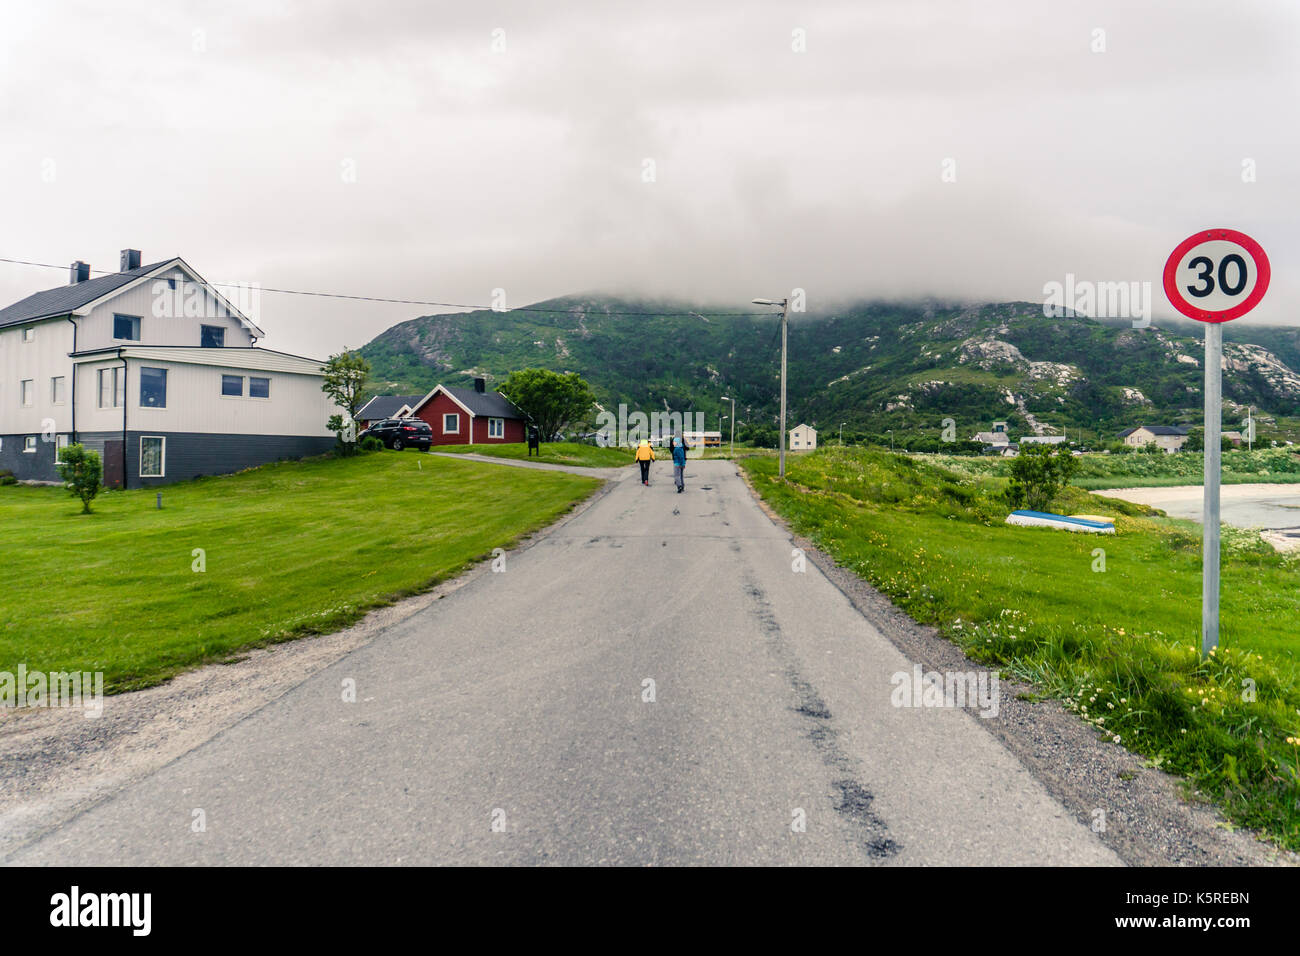 Landscape of village in Norway, Scandinavia Stock Photo